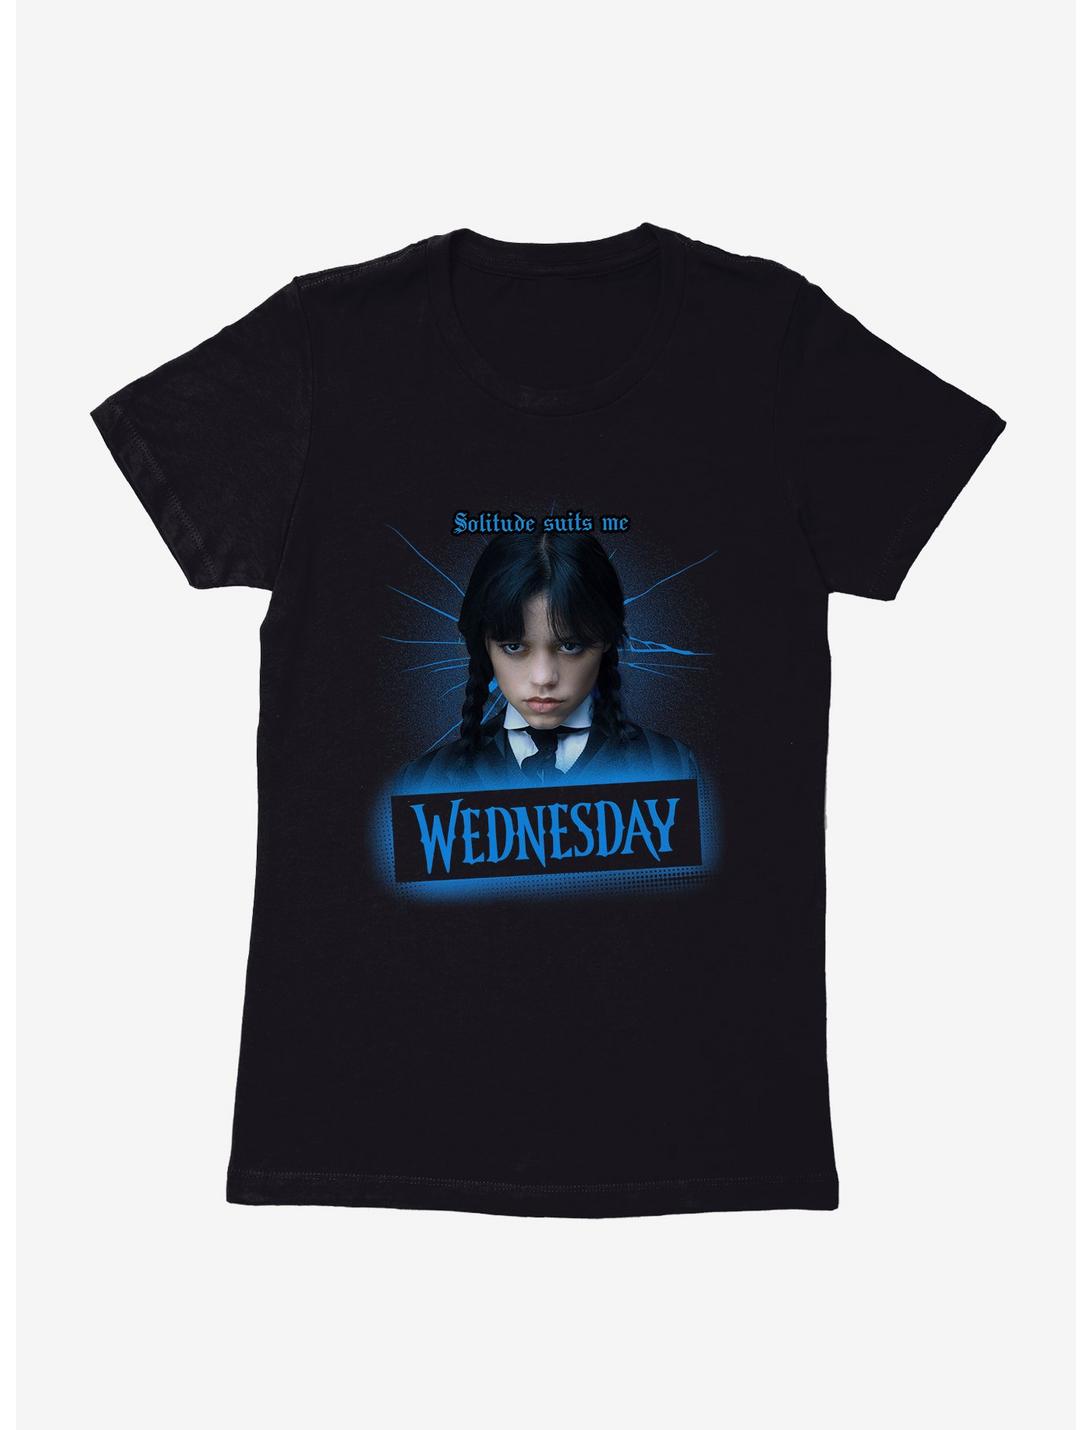 Wednesday Solitude Suits Me Womens T-Shirt, BLACK, hi-res